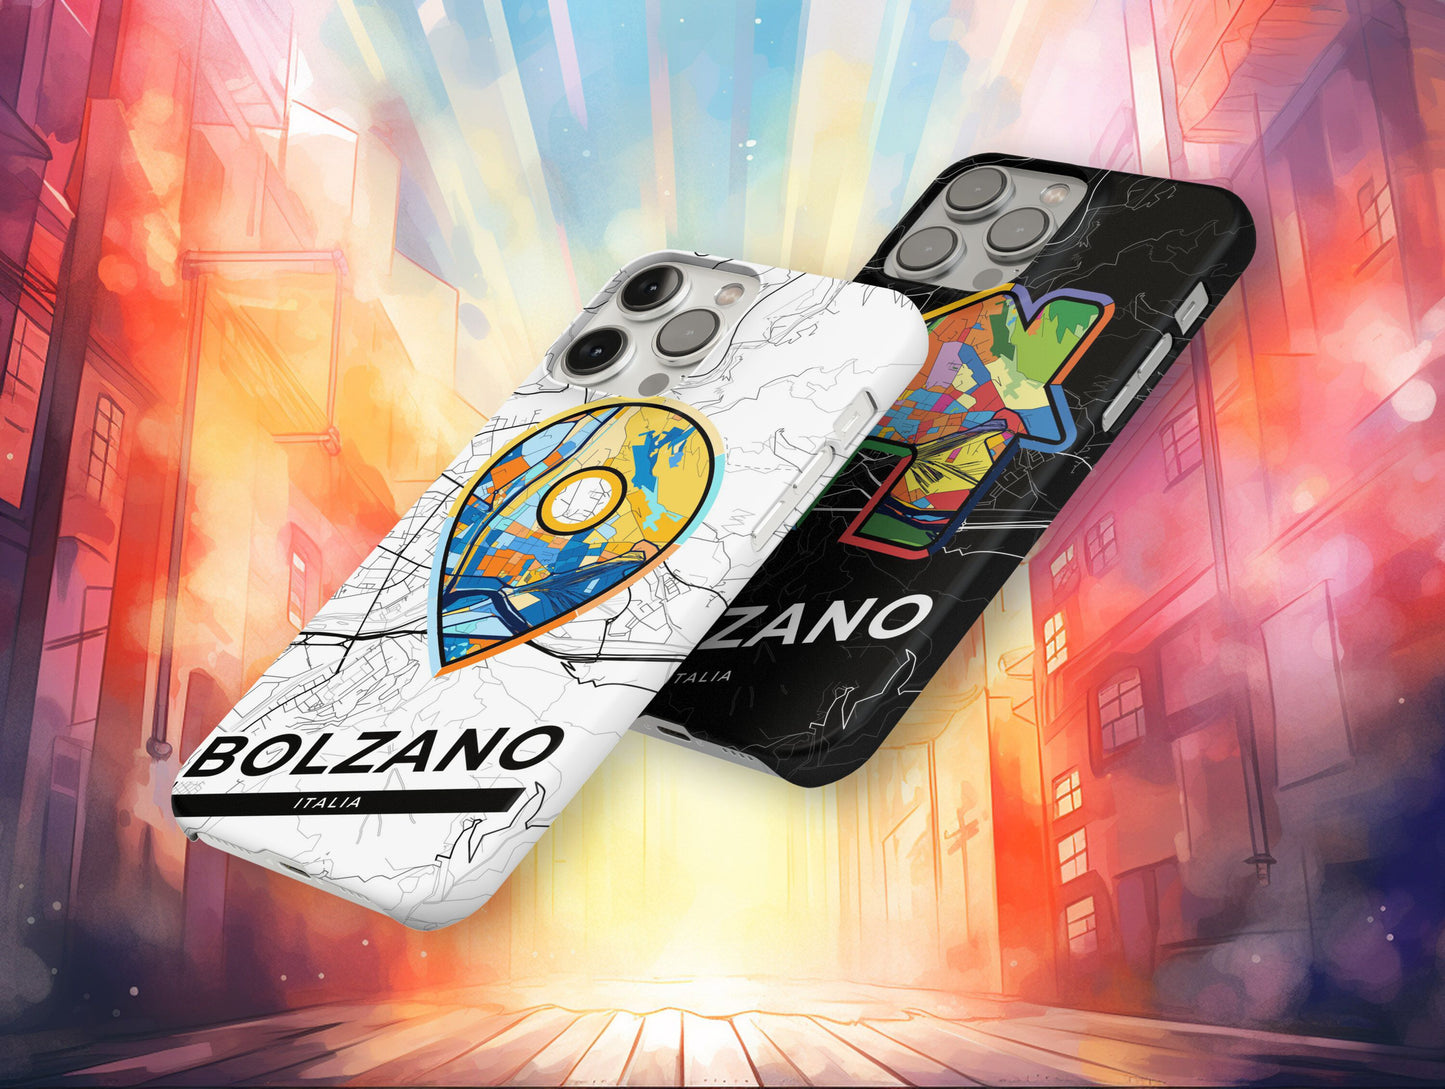 Bolzano Italy slim phone case with colorful icon. Birthday, wedding or housewarming gift. Couple match cases.